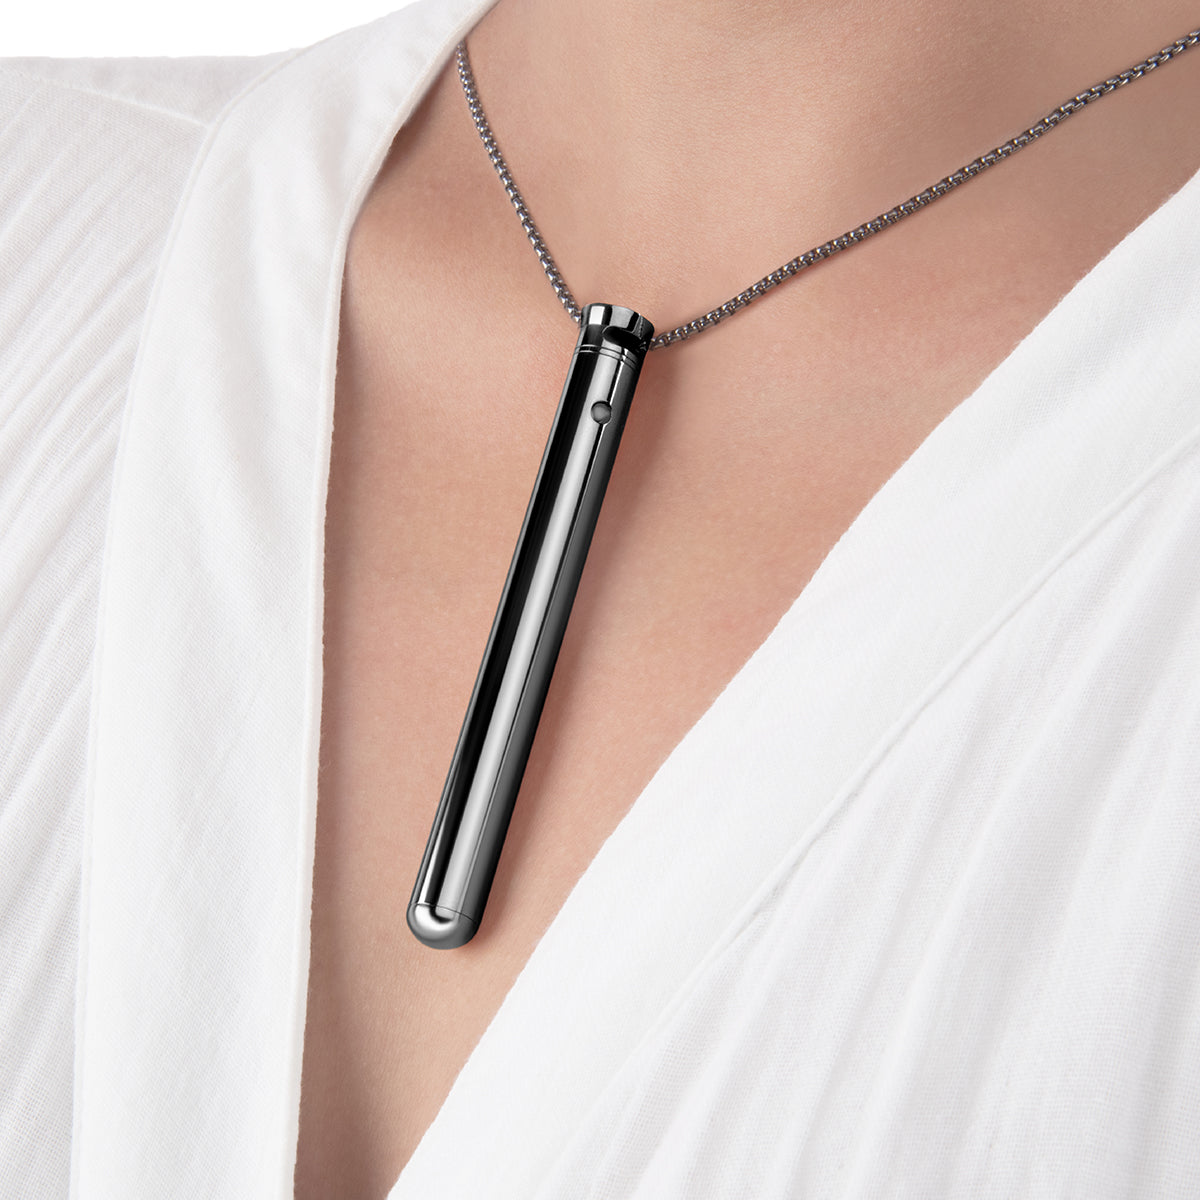 Le Wand Necklace Vibe Rechargeable Discreet Jewelry Vibrator Black - Zateo Joy